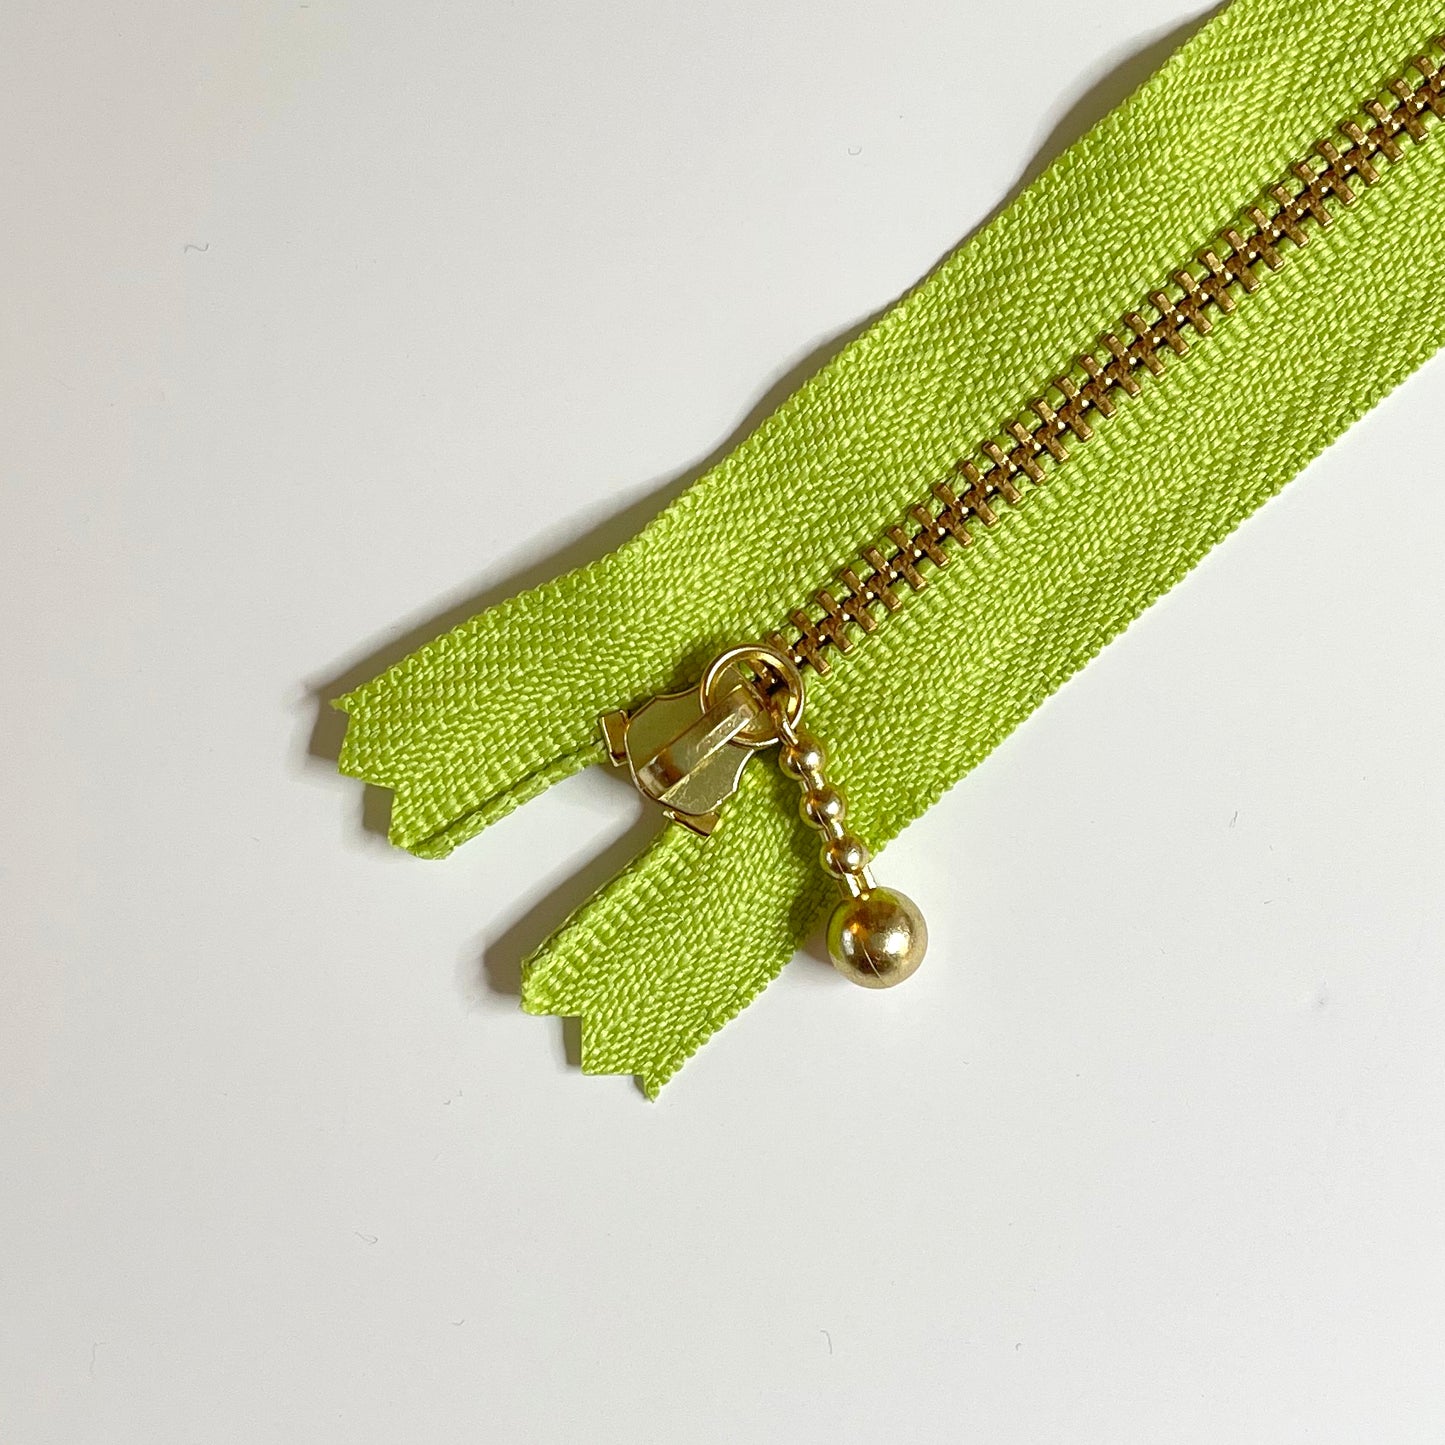 YKK Metalic Zippers with Water-drop Pull - light green (6 1/4" -16CM)